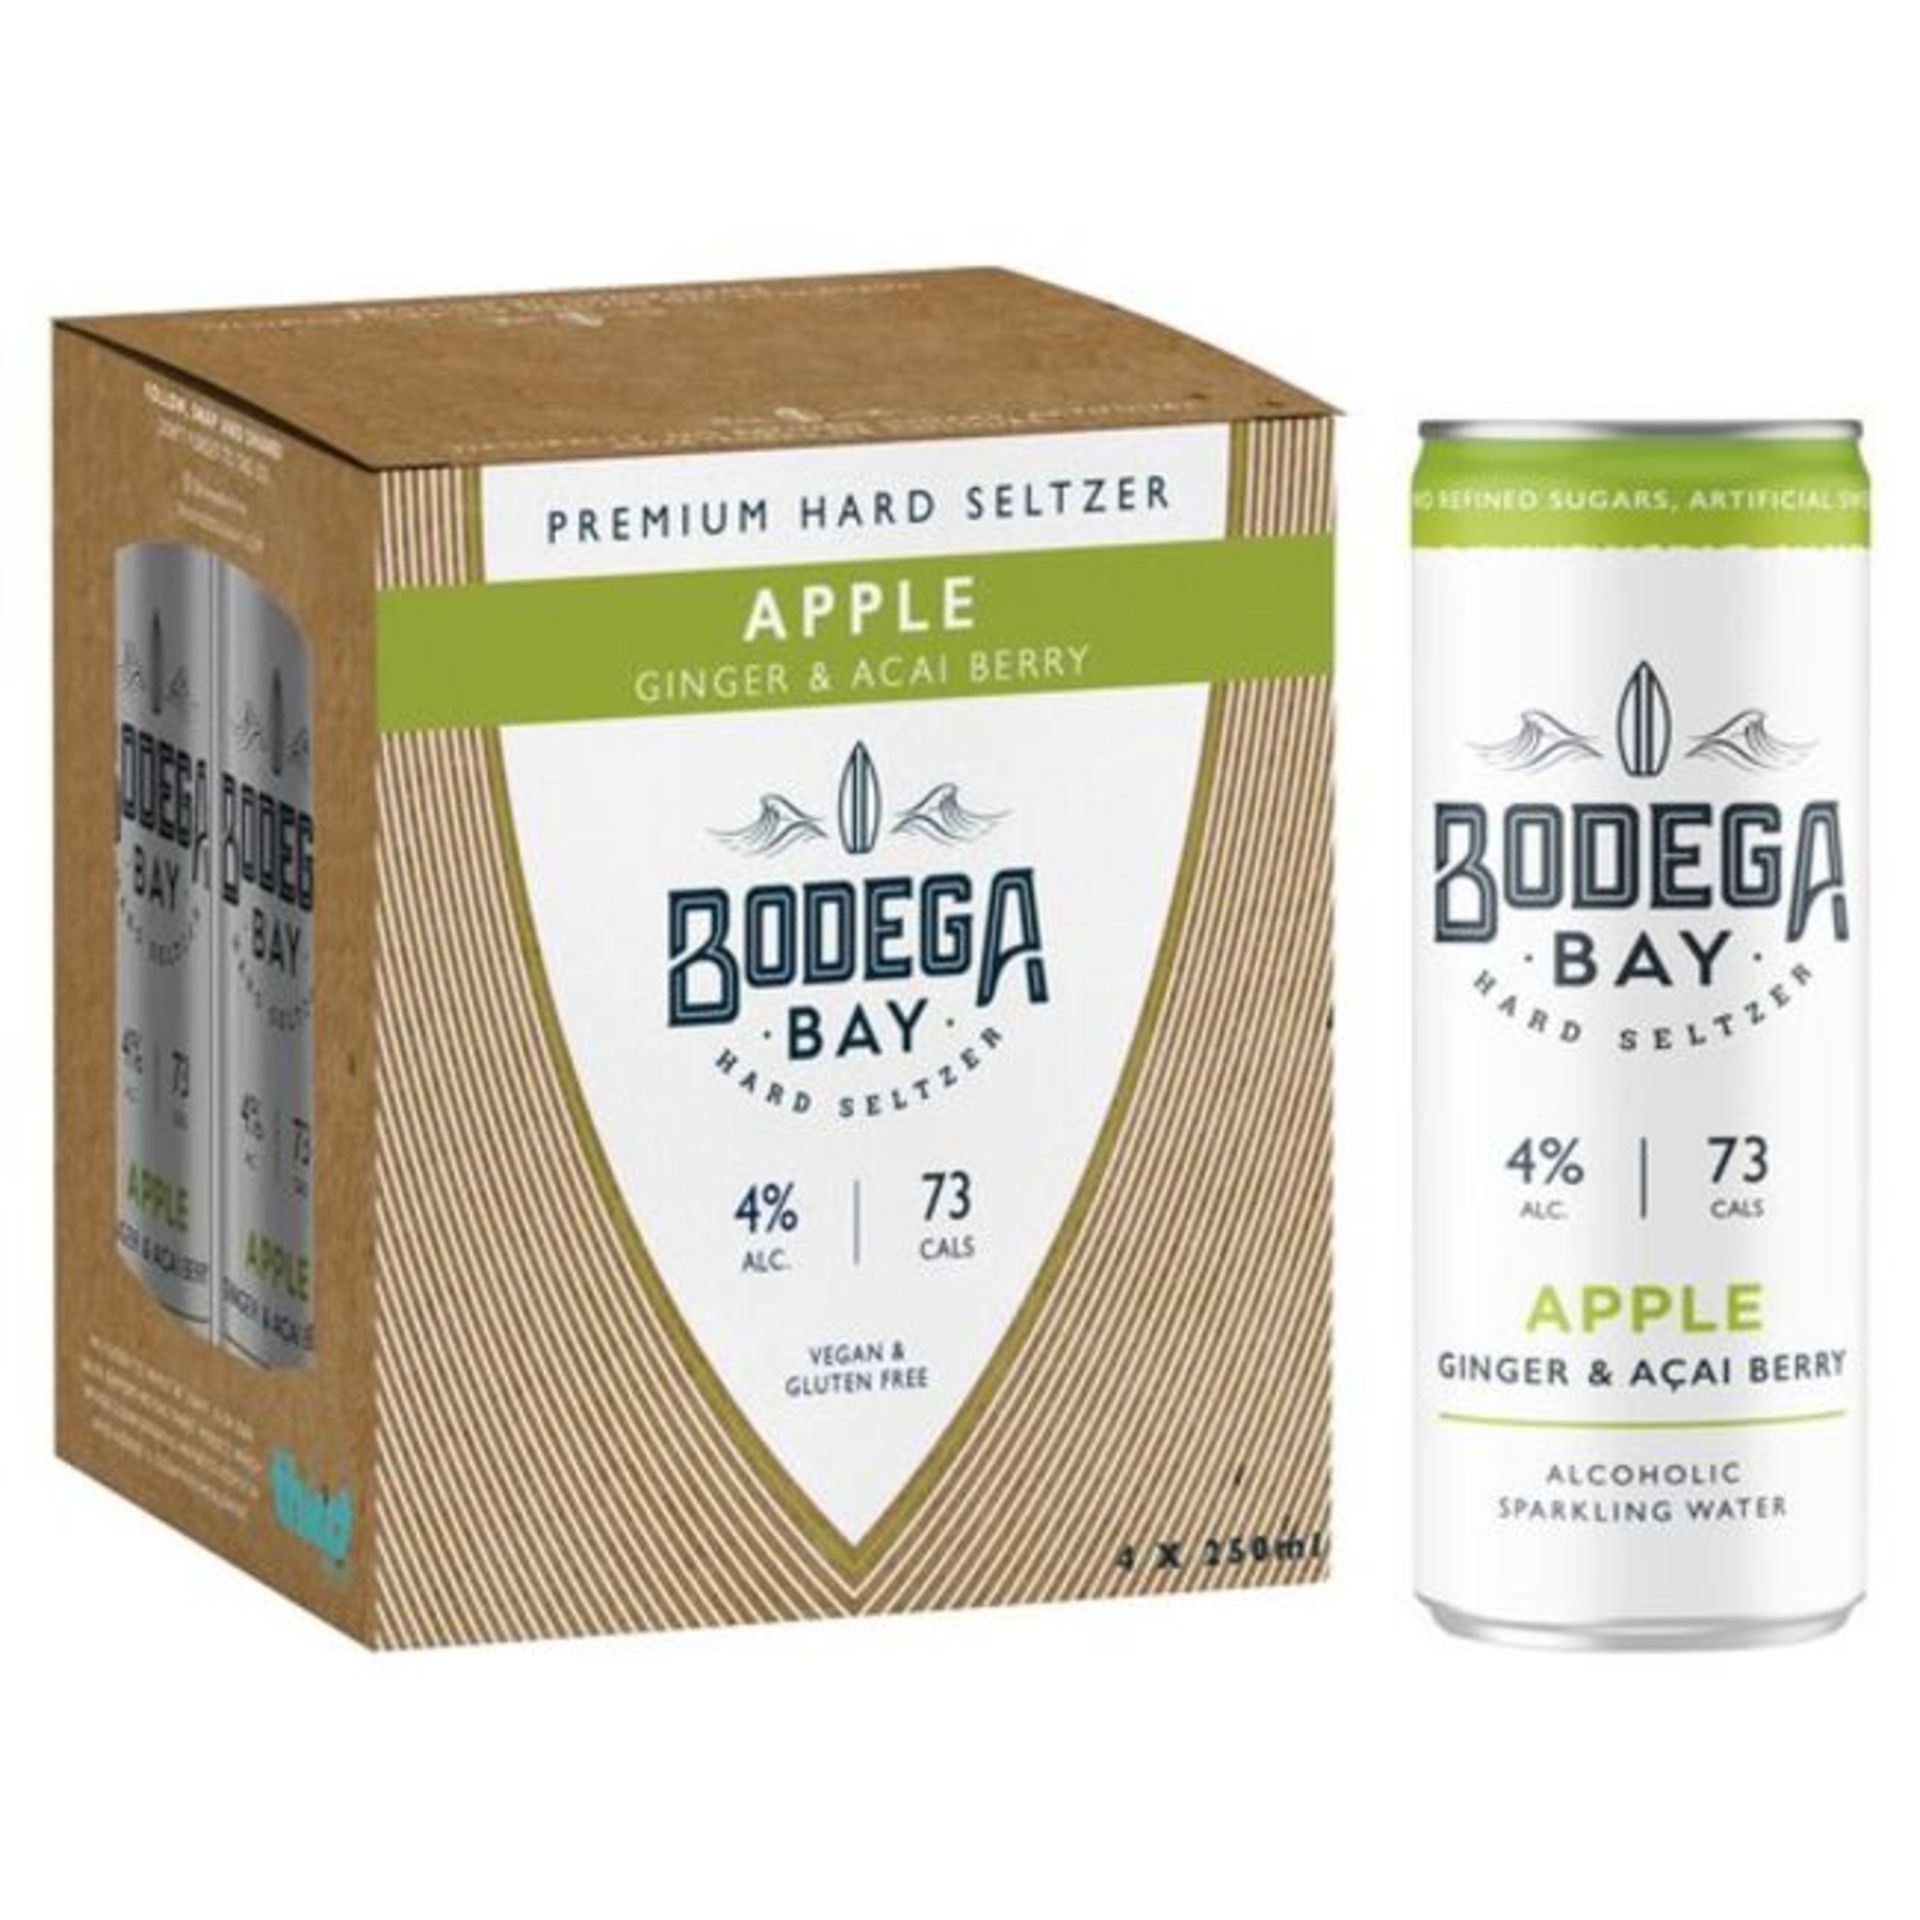 24 x Bodega Bay Hard Seltzer 250ml Alcoholic Sparkling Water Drinks - Apple Ginger & Acai Berry - Image 9 of 9